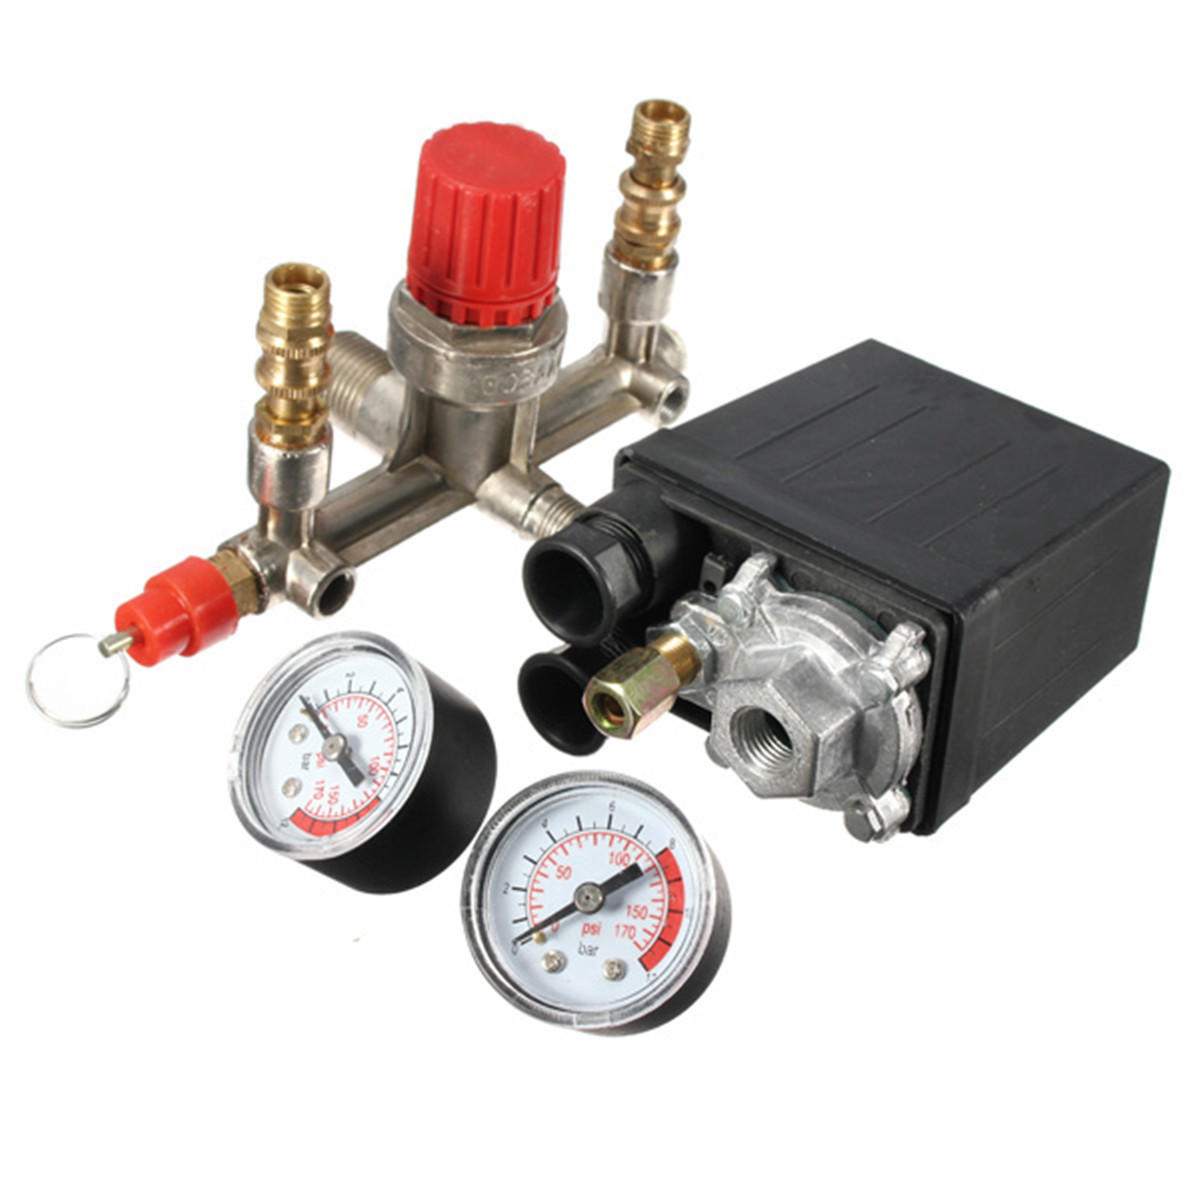 Regulator air compressor pump pressure control switch valve gauge heaty duty